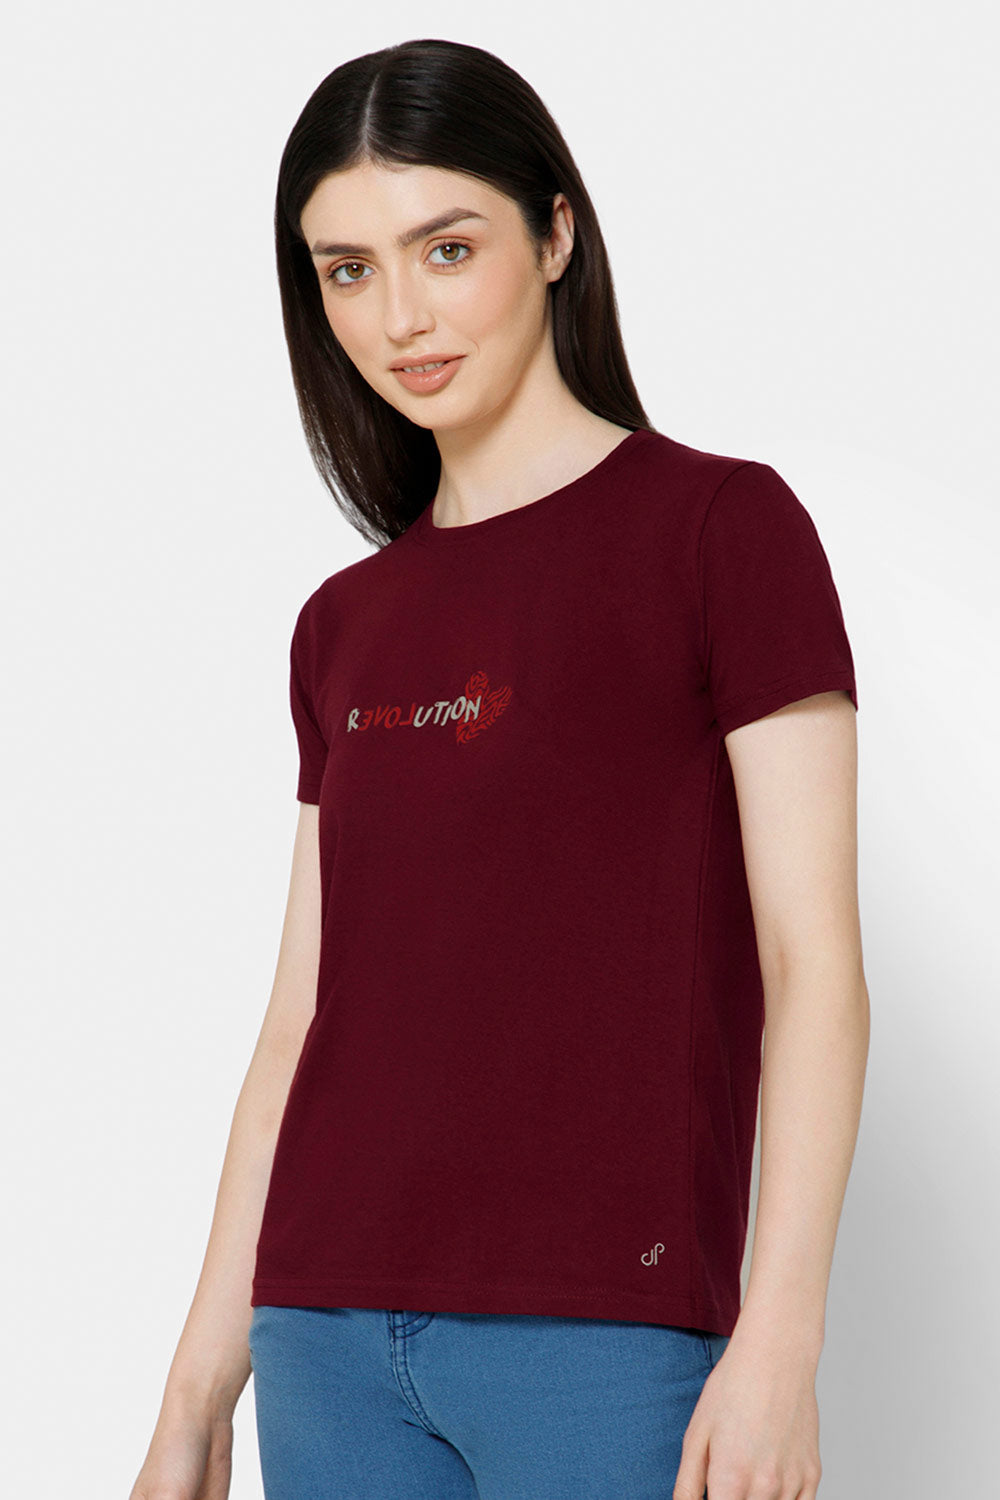 Jusperf Women's Printed Crew Neck Casual T-Shirt - Maroon - TS33